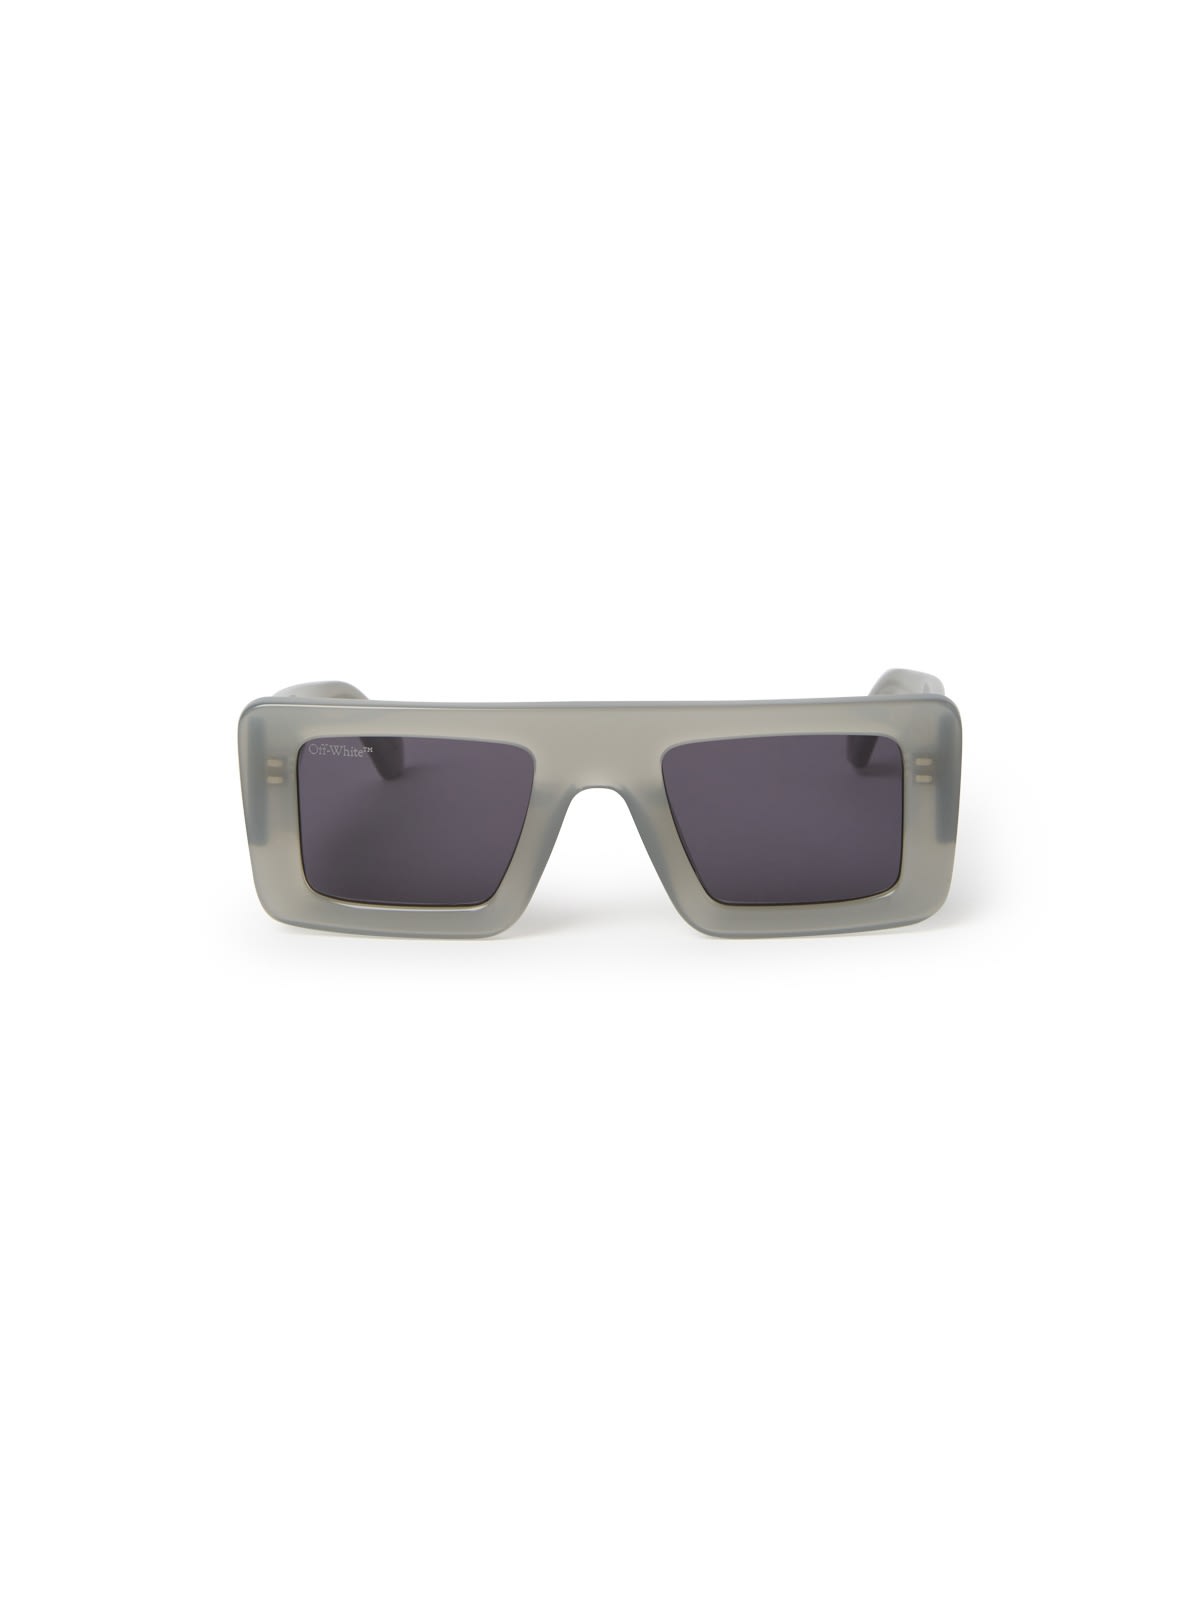 Off-White Men's Mercer Square Sunglasses